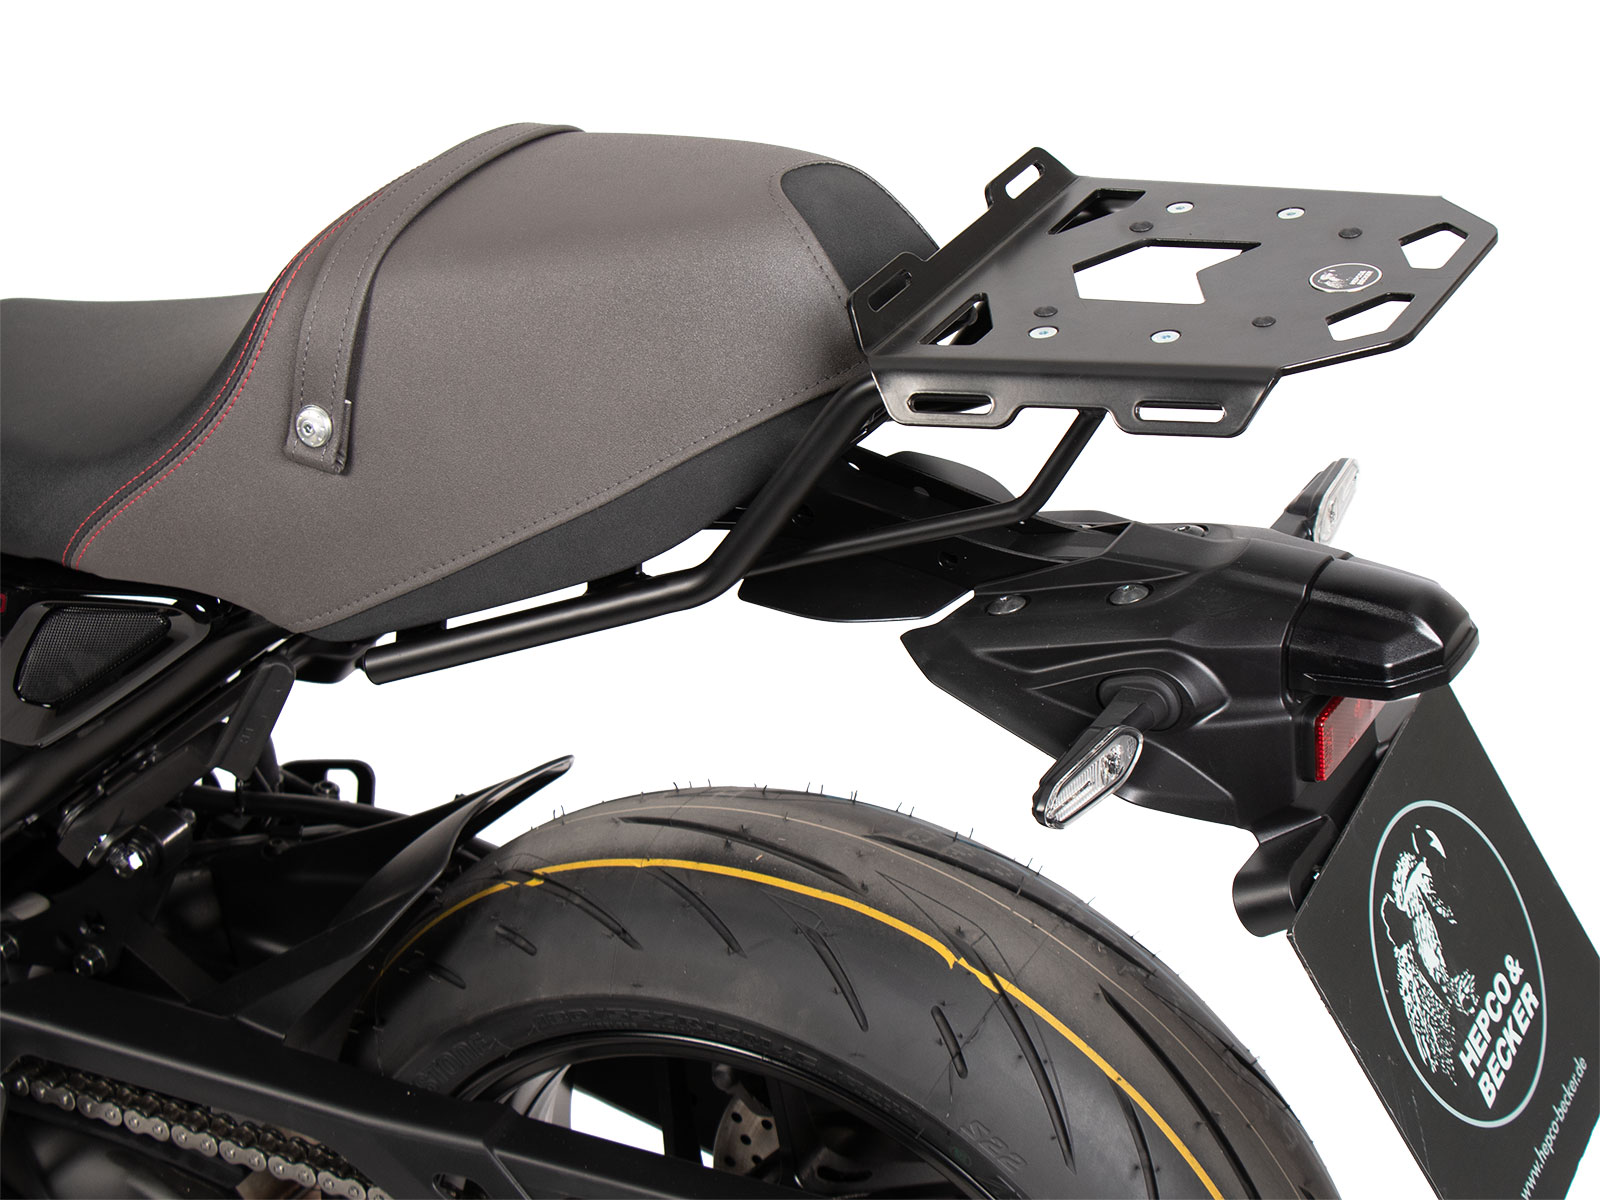 Support de top case Easyrack Hepco-Becker Moto Guzzi V 100